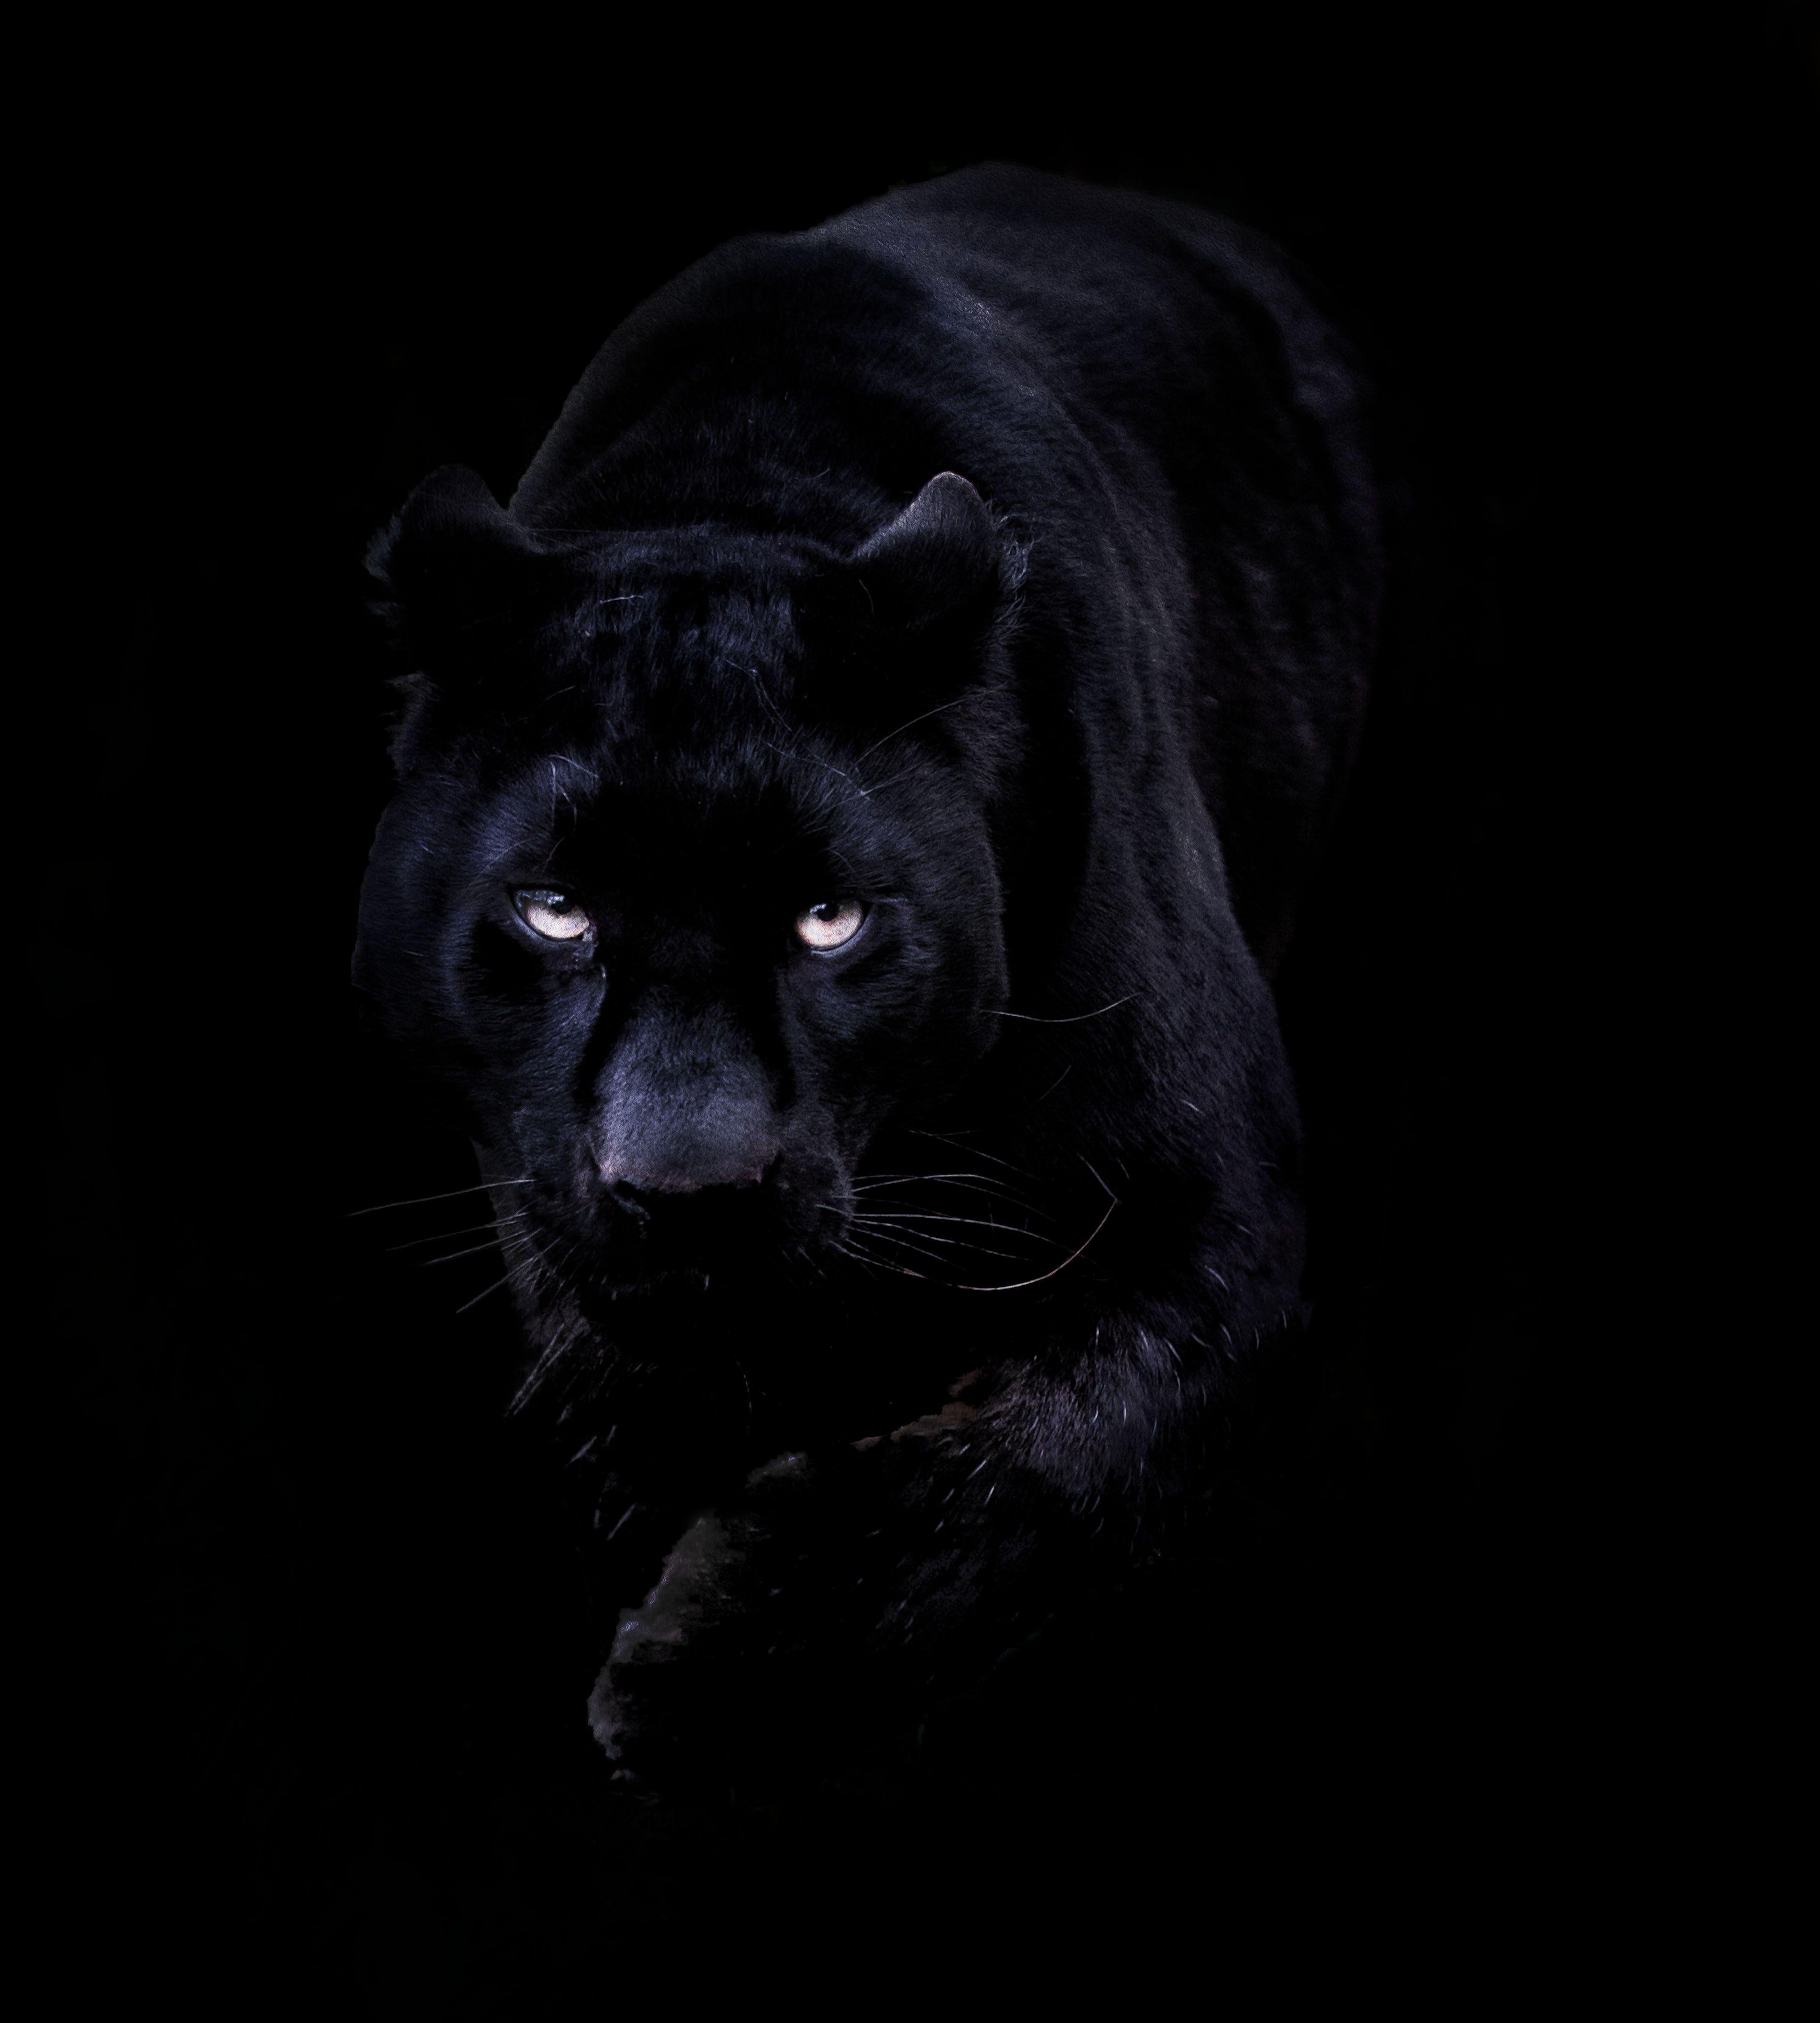 Source URL /cool Black Panther Wallpaper. Black Panther Cat, Jaguar Animal, Panther Cat